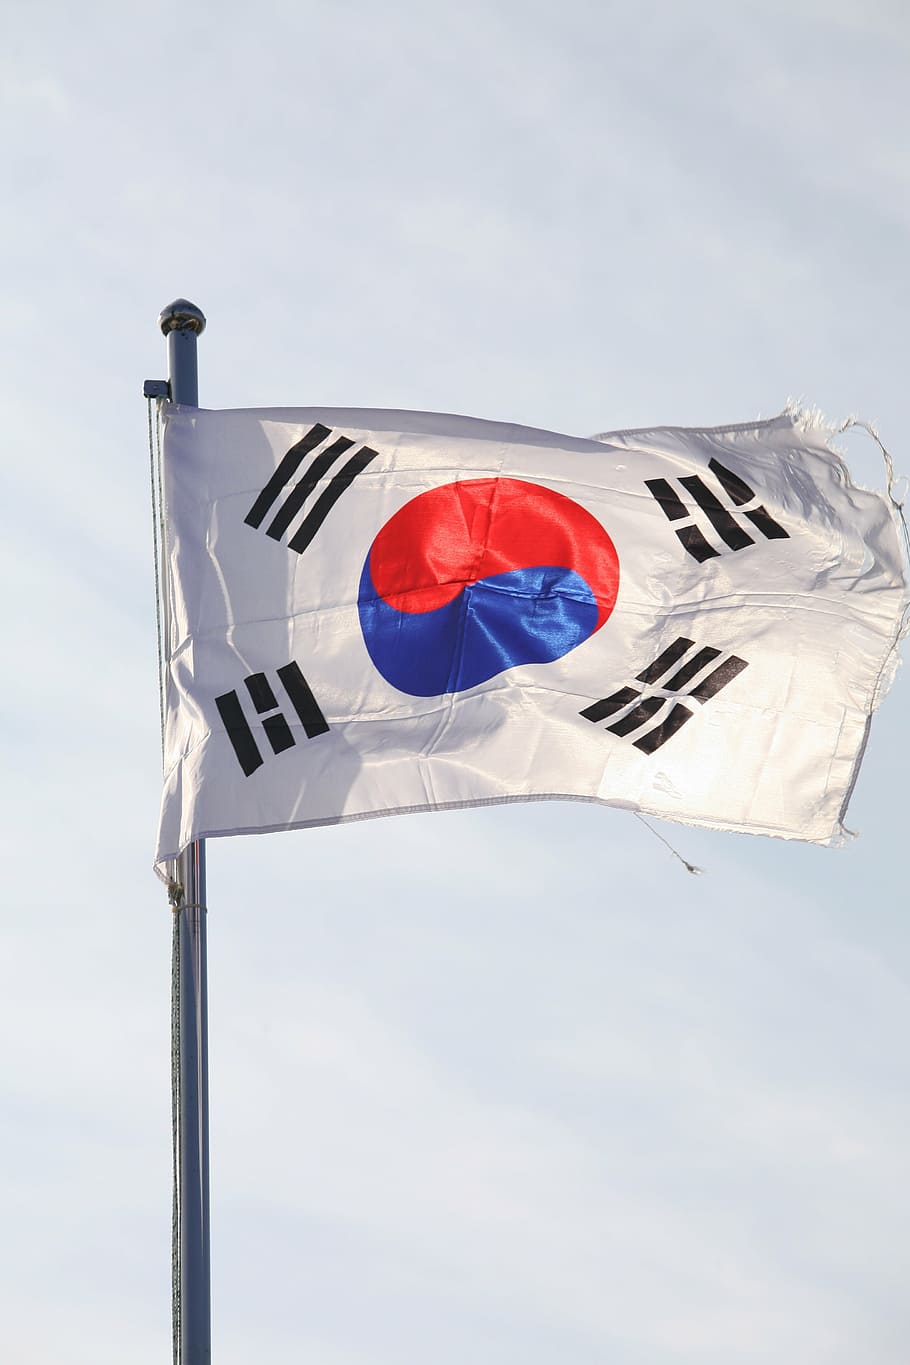 north korean flag wallpaper